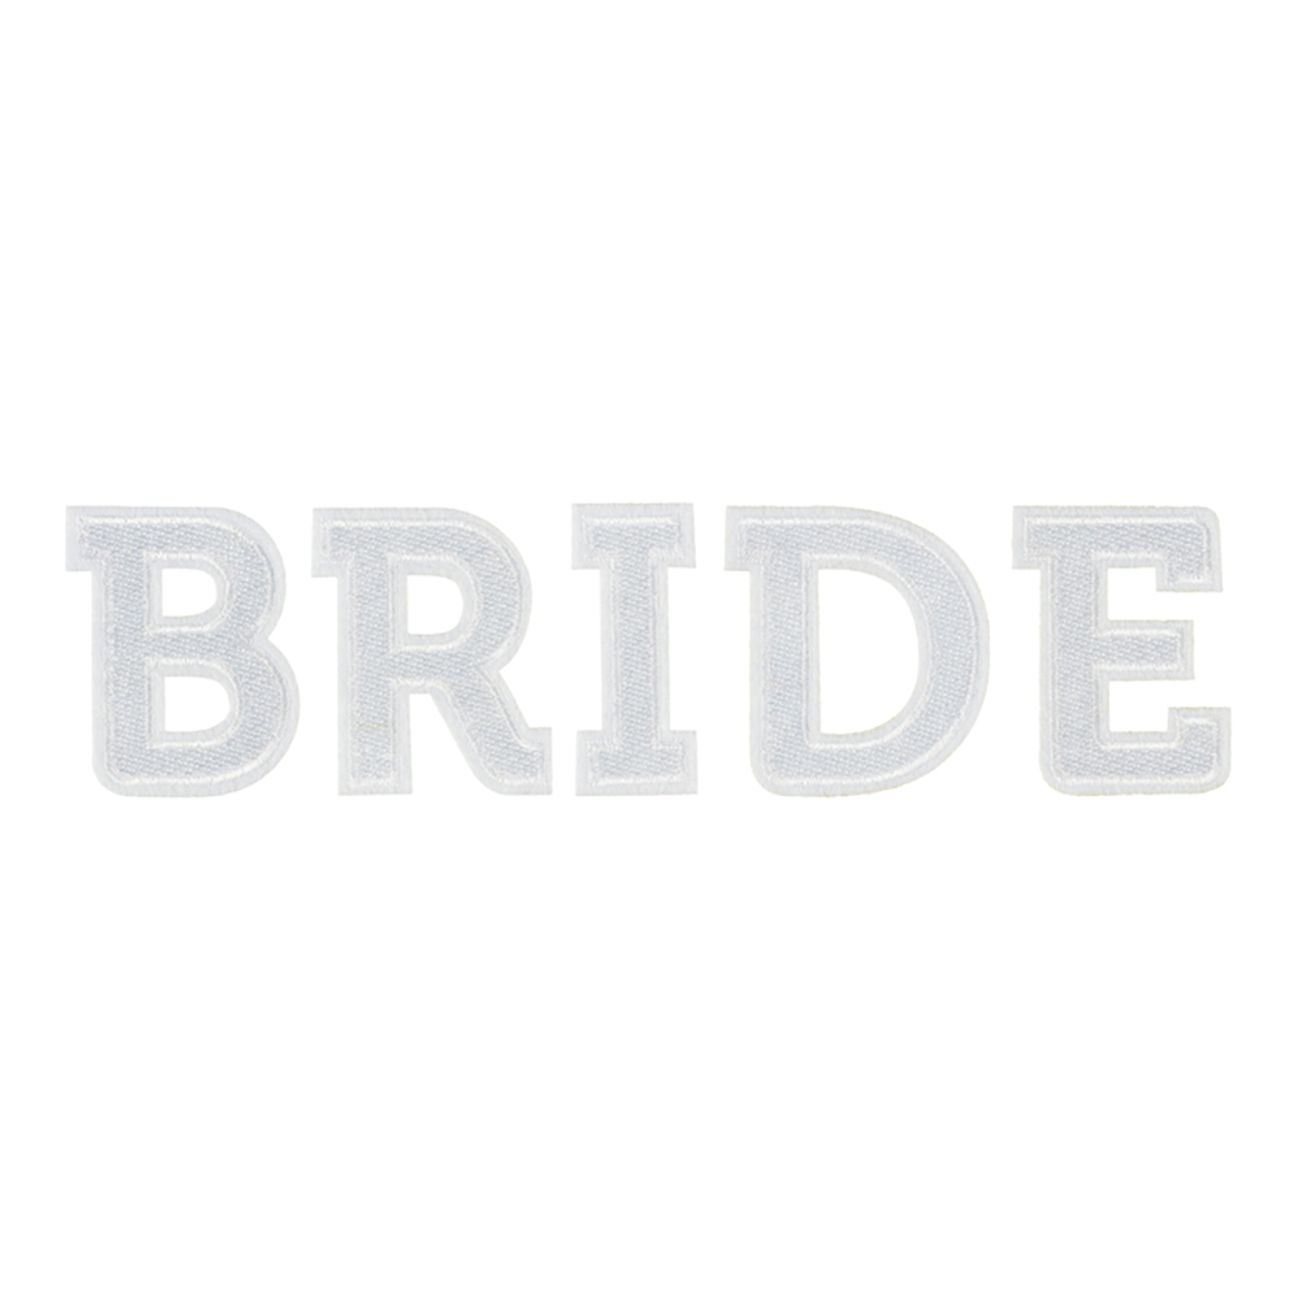 tygmarke-bride-83738-2